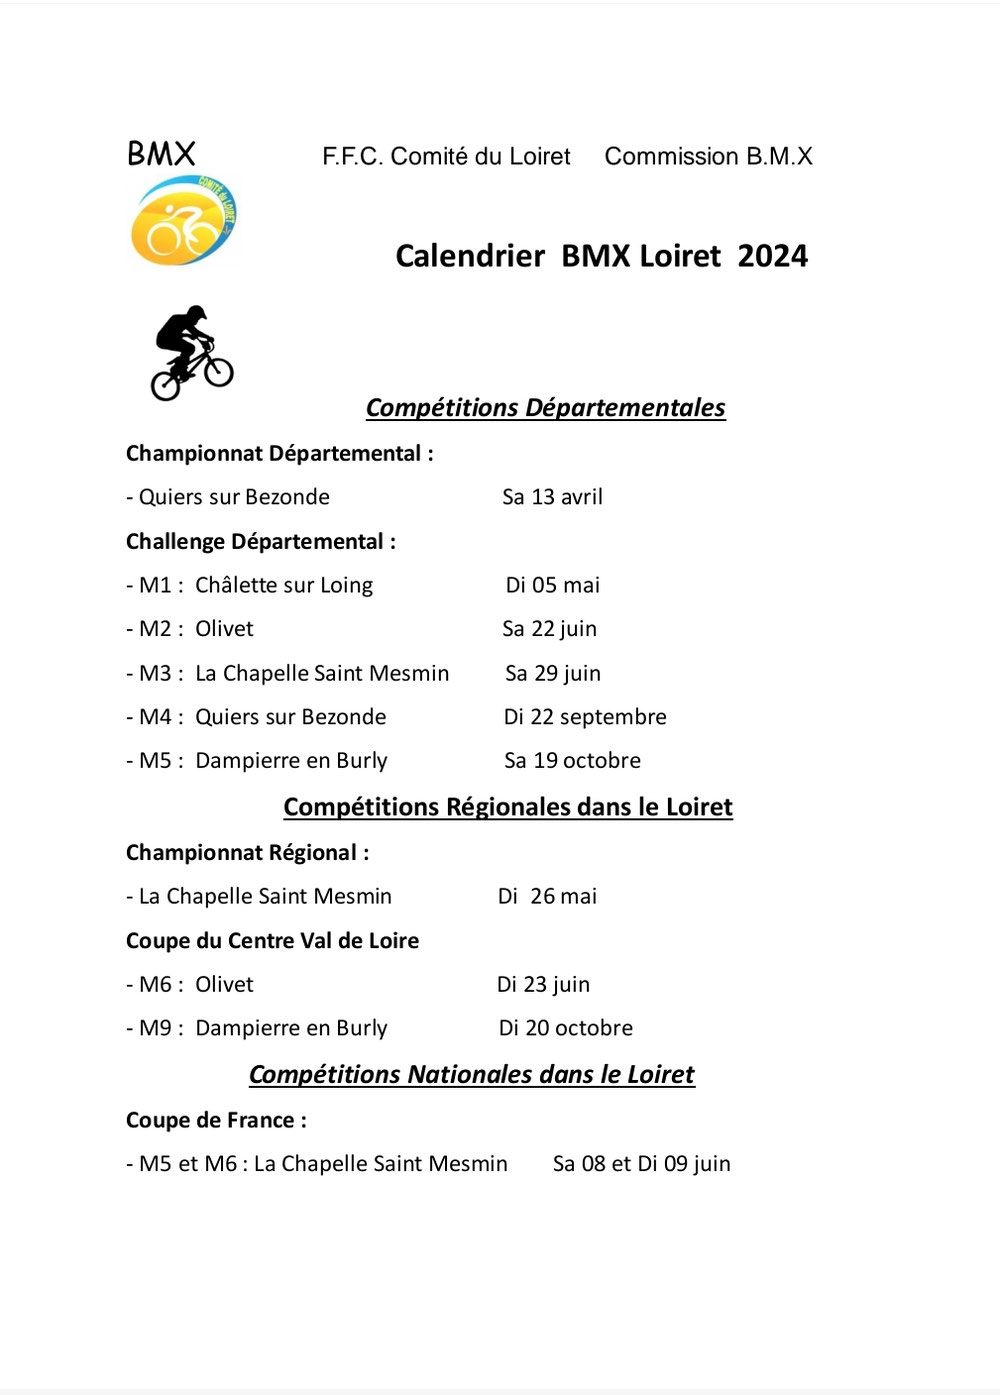 Calendrier BMX Loiret 